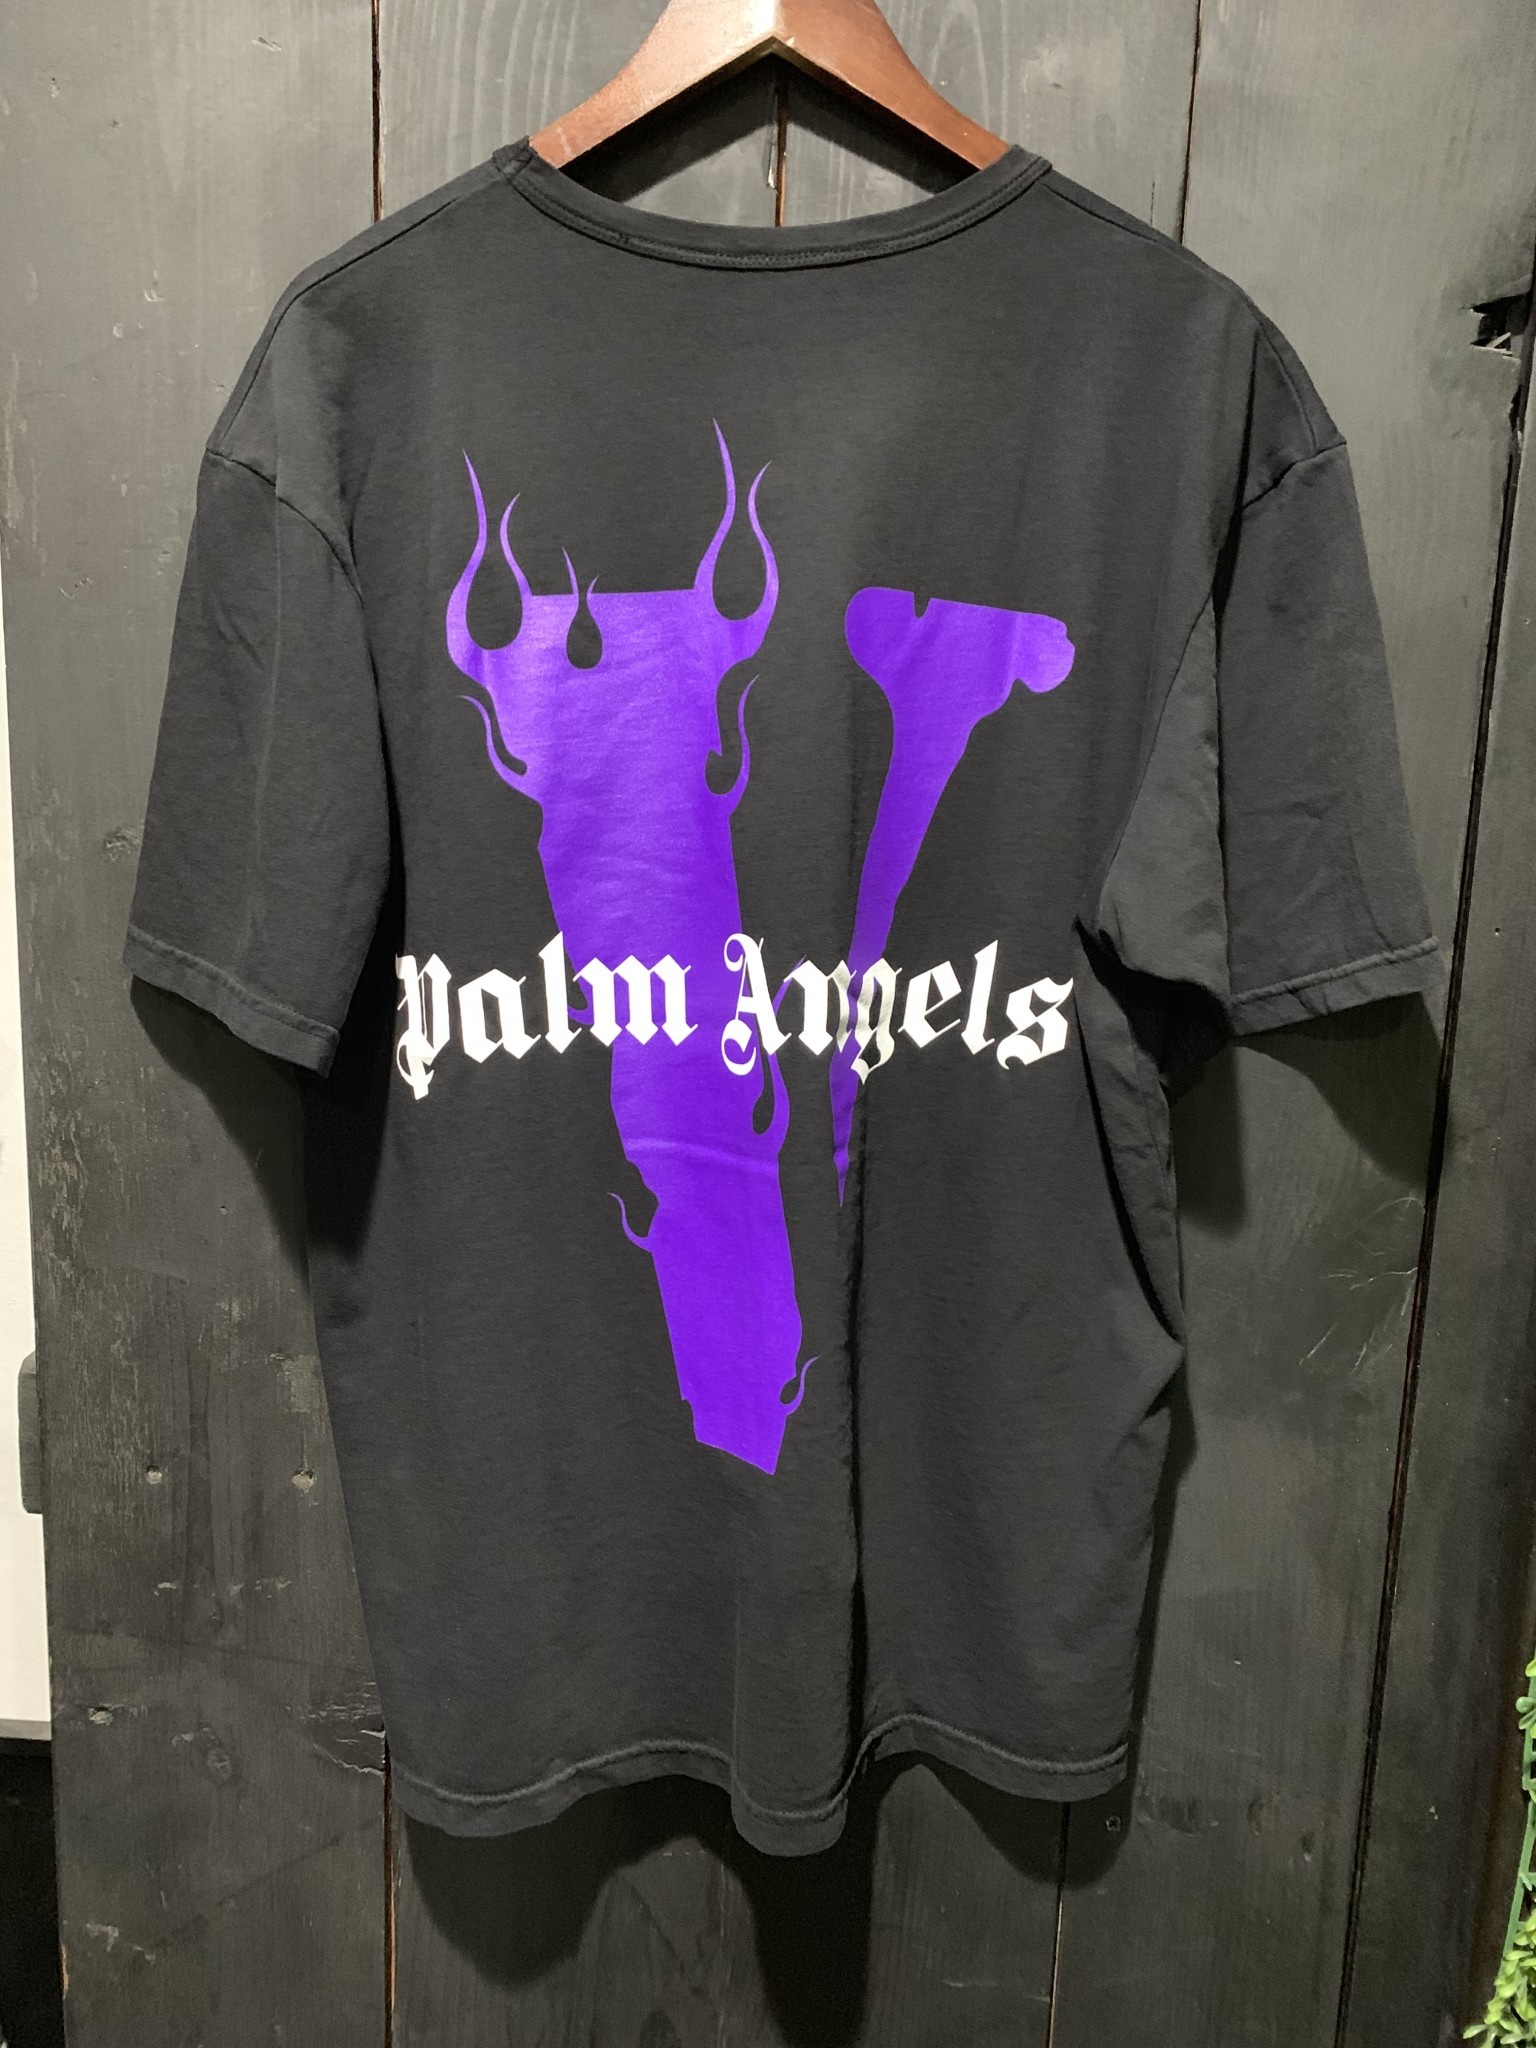 palm angels x vlone shirt